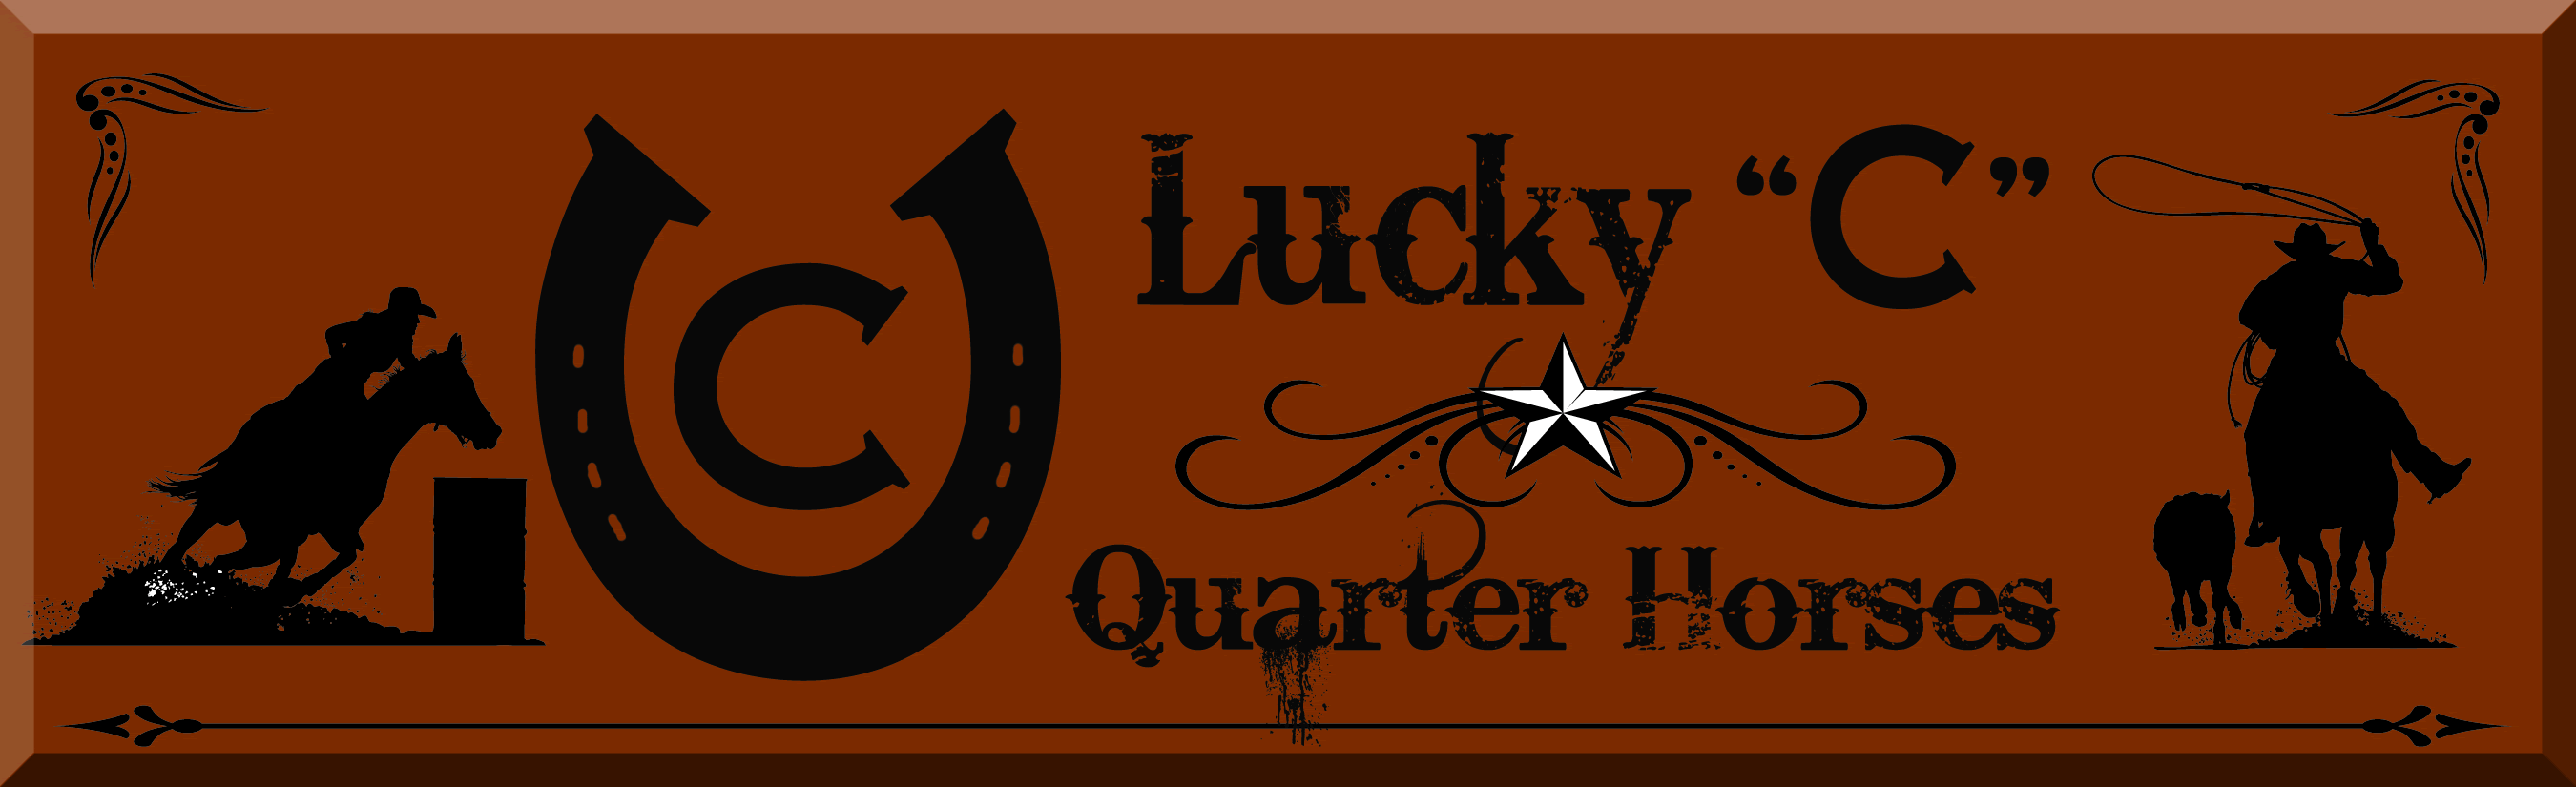 Lucky C Quarterhorses